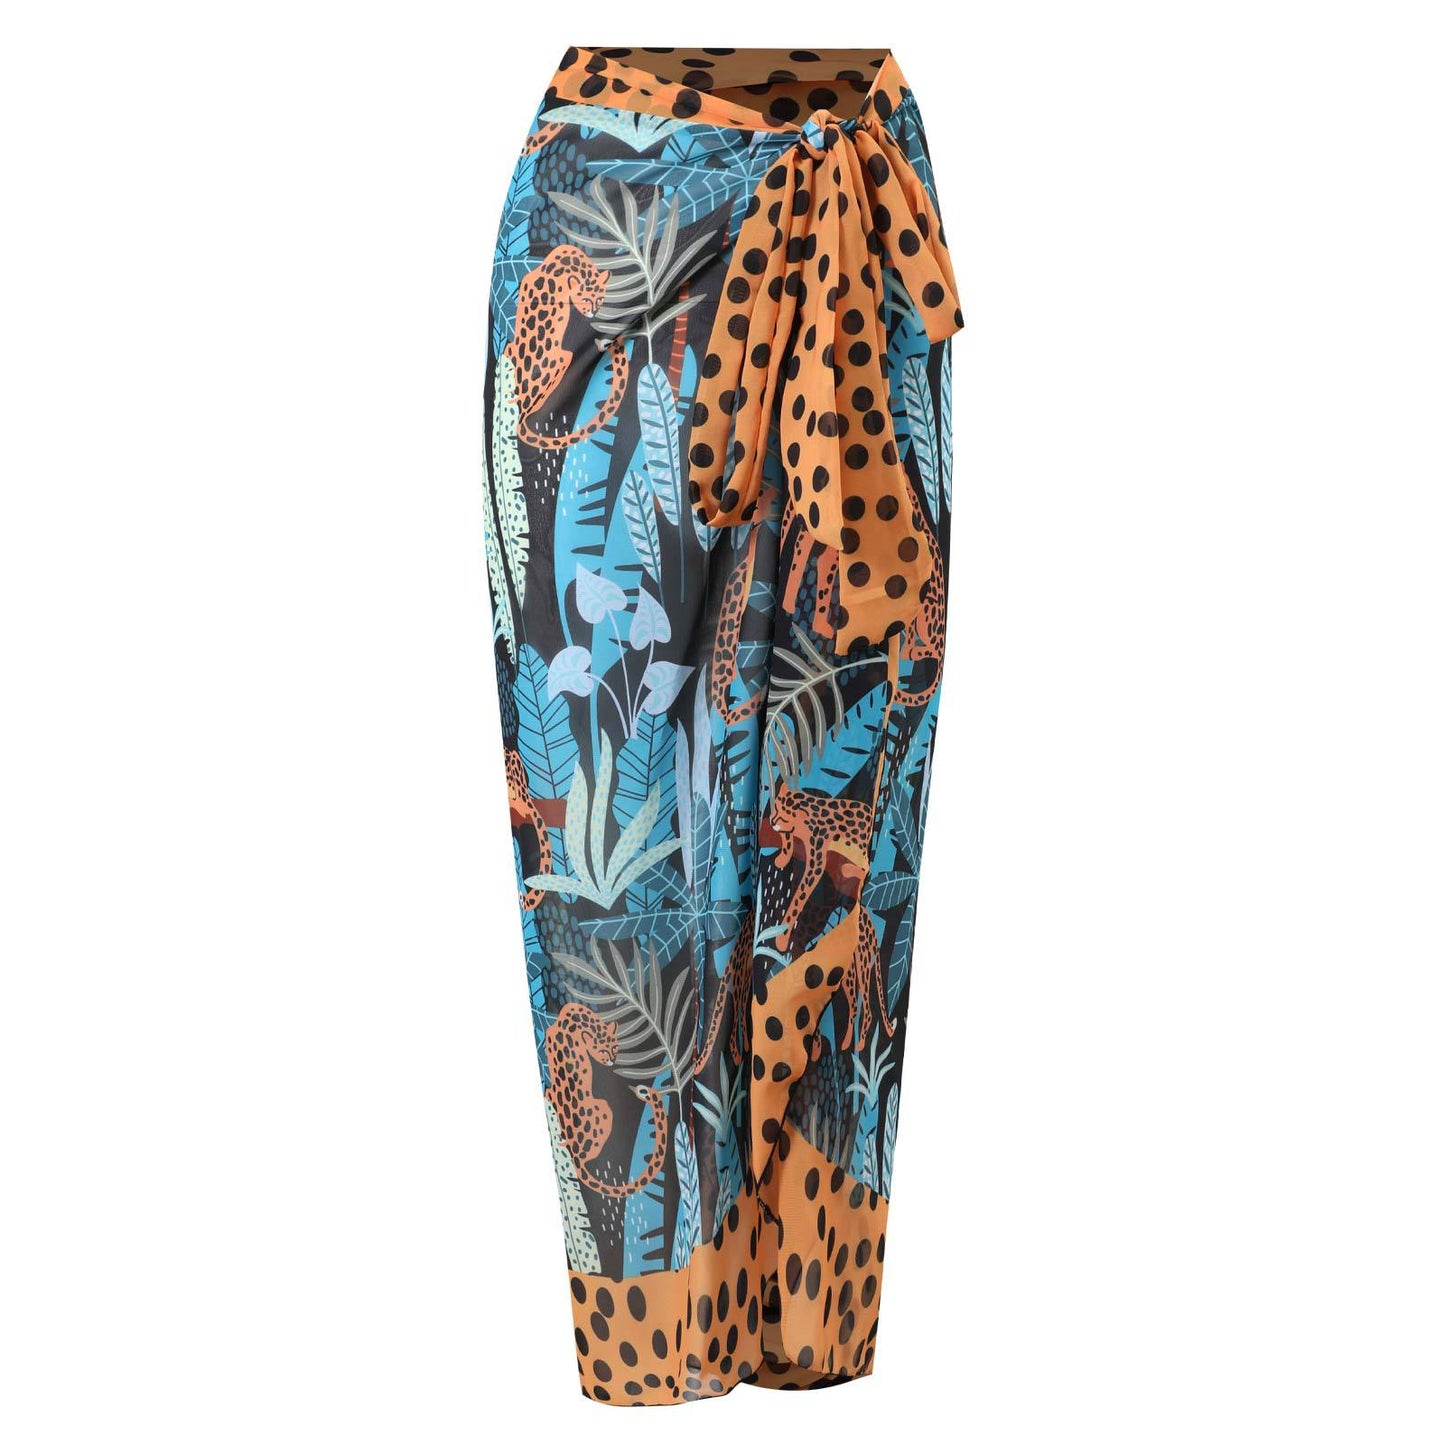 Leopard Print Swimwear